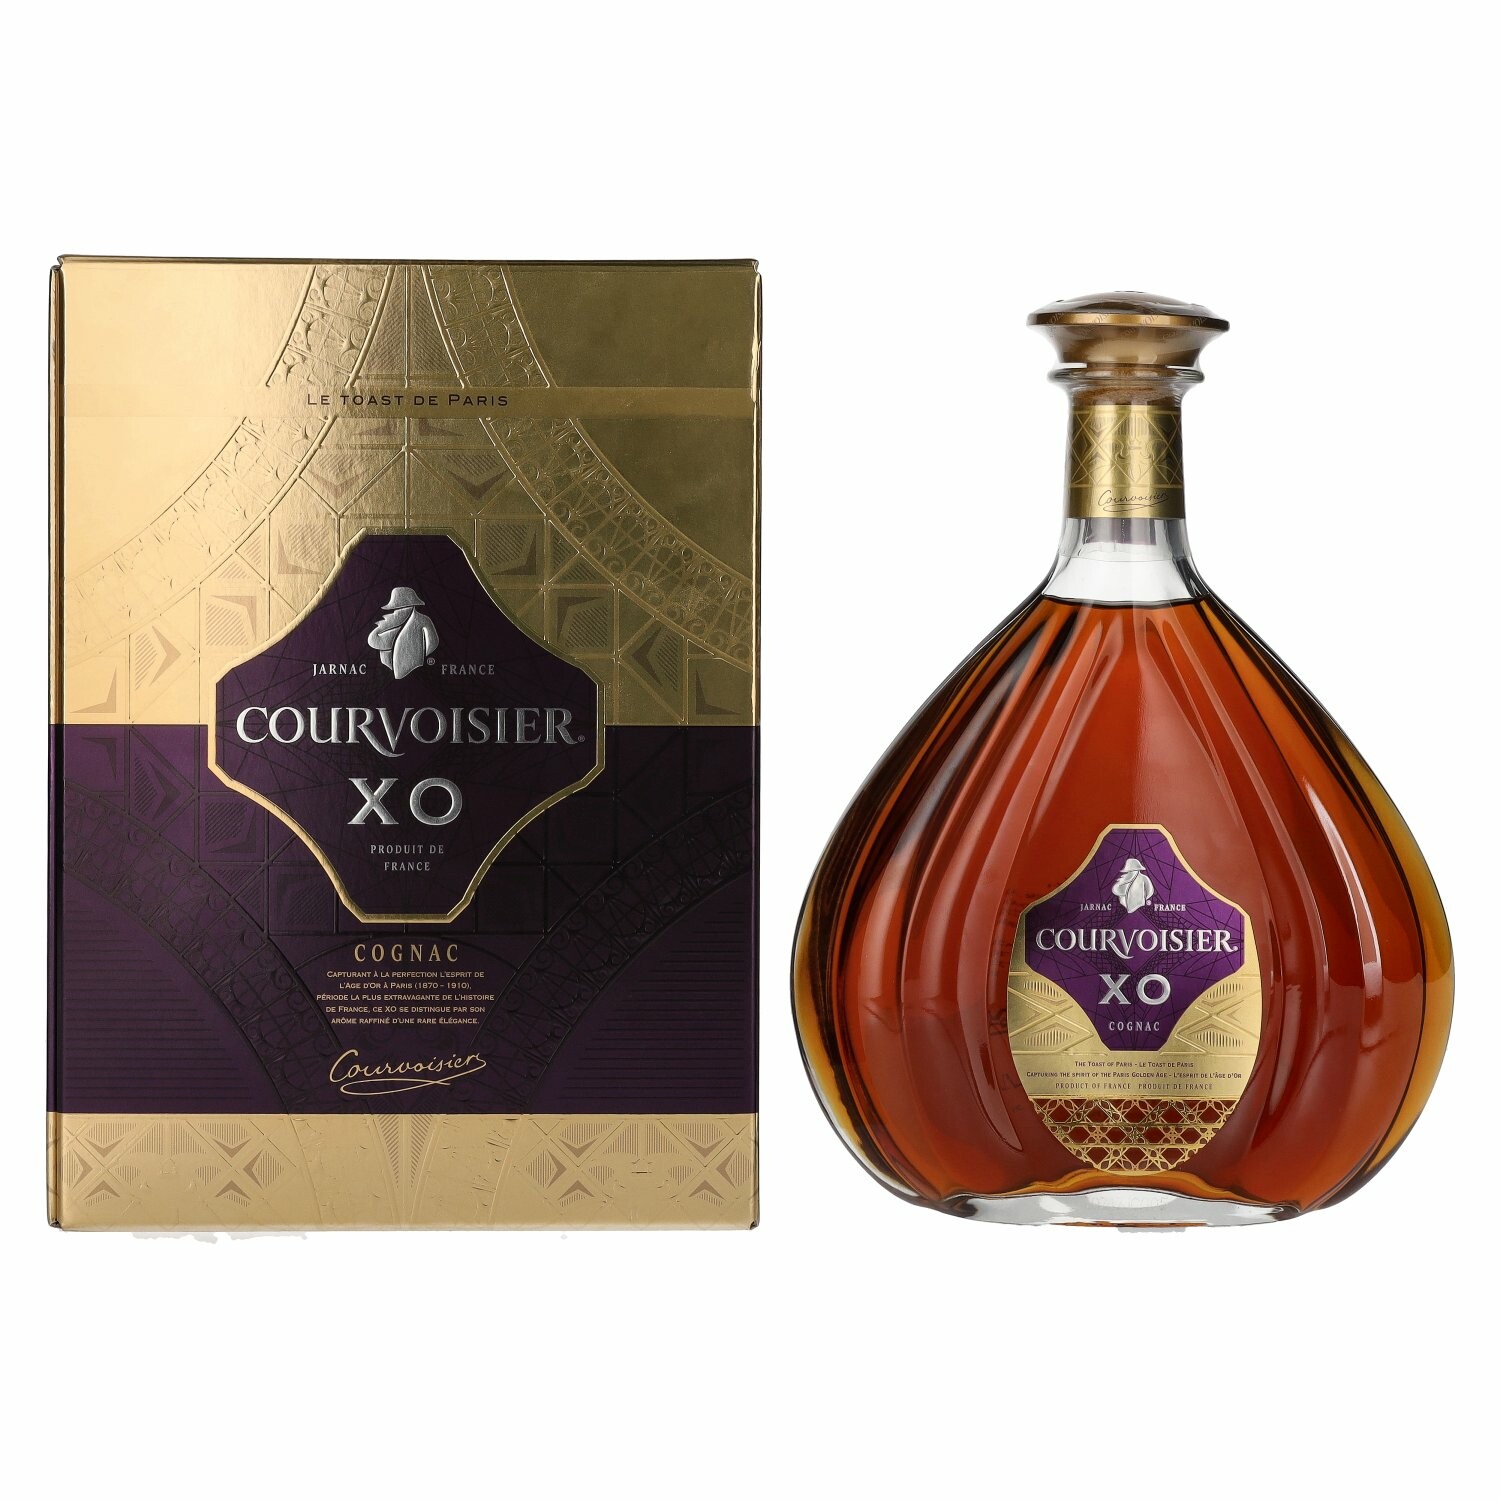 Courvoisier XO Cognac Le Toast de Paris 40% Vol. 0,7l in Giftbox